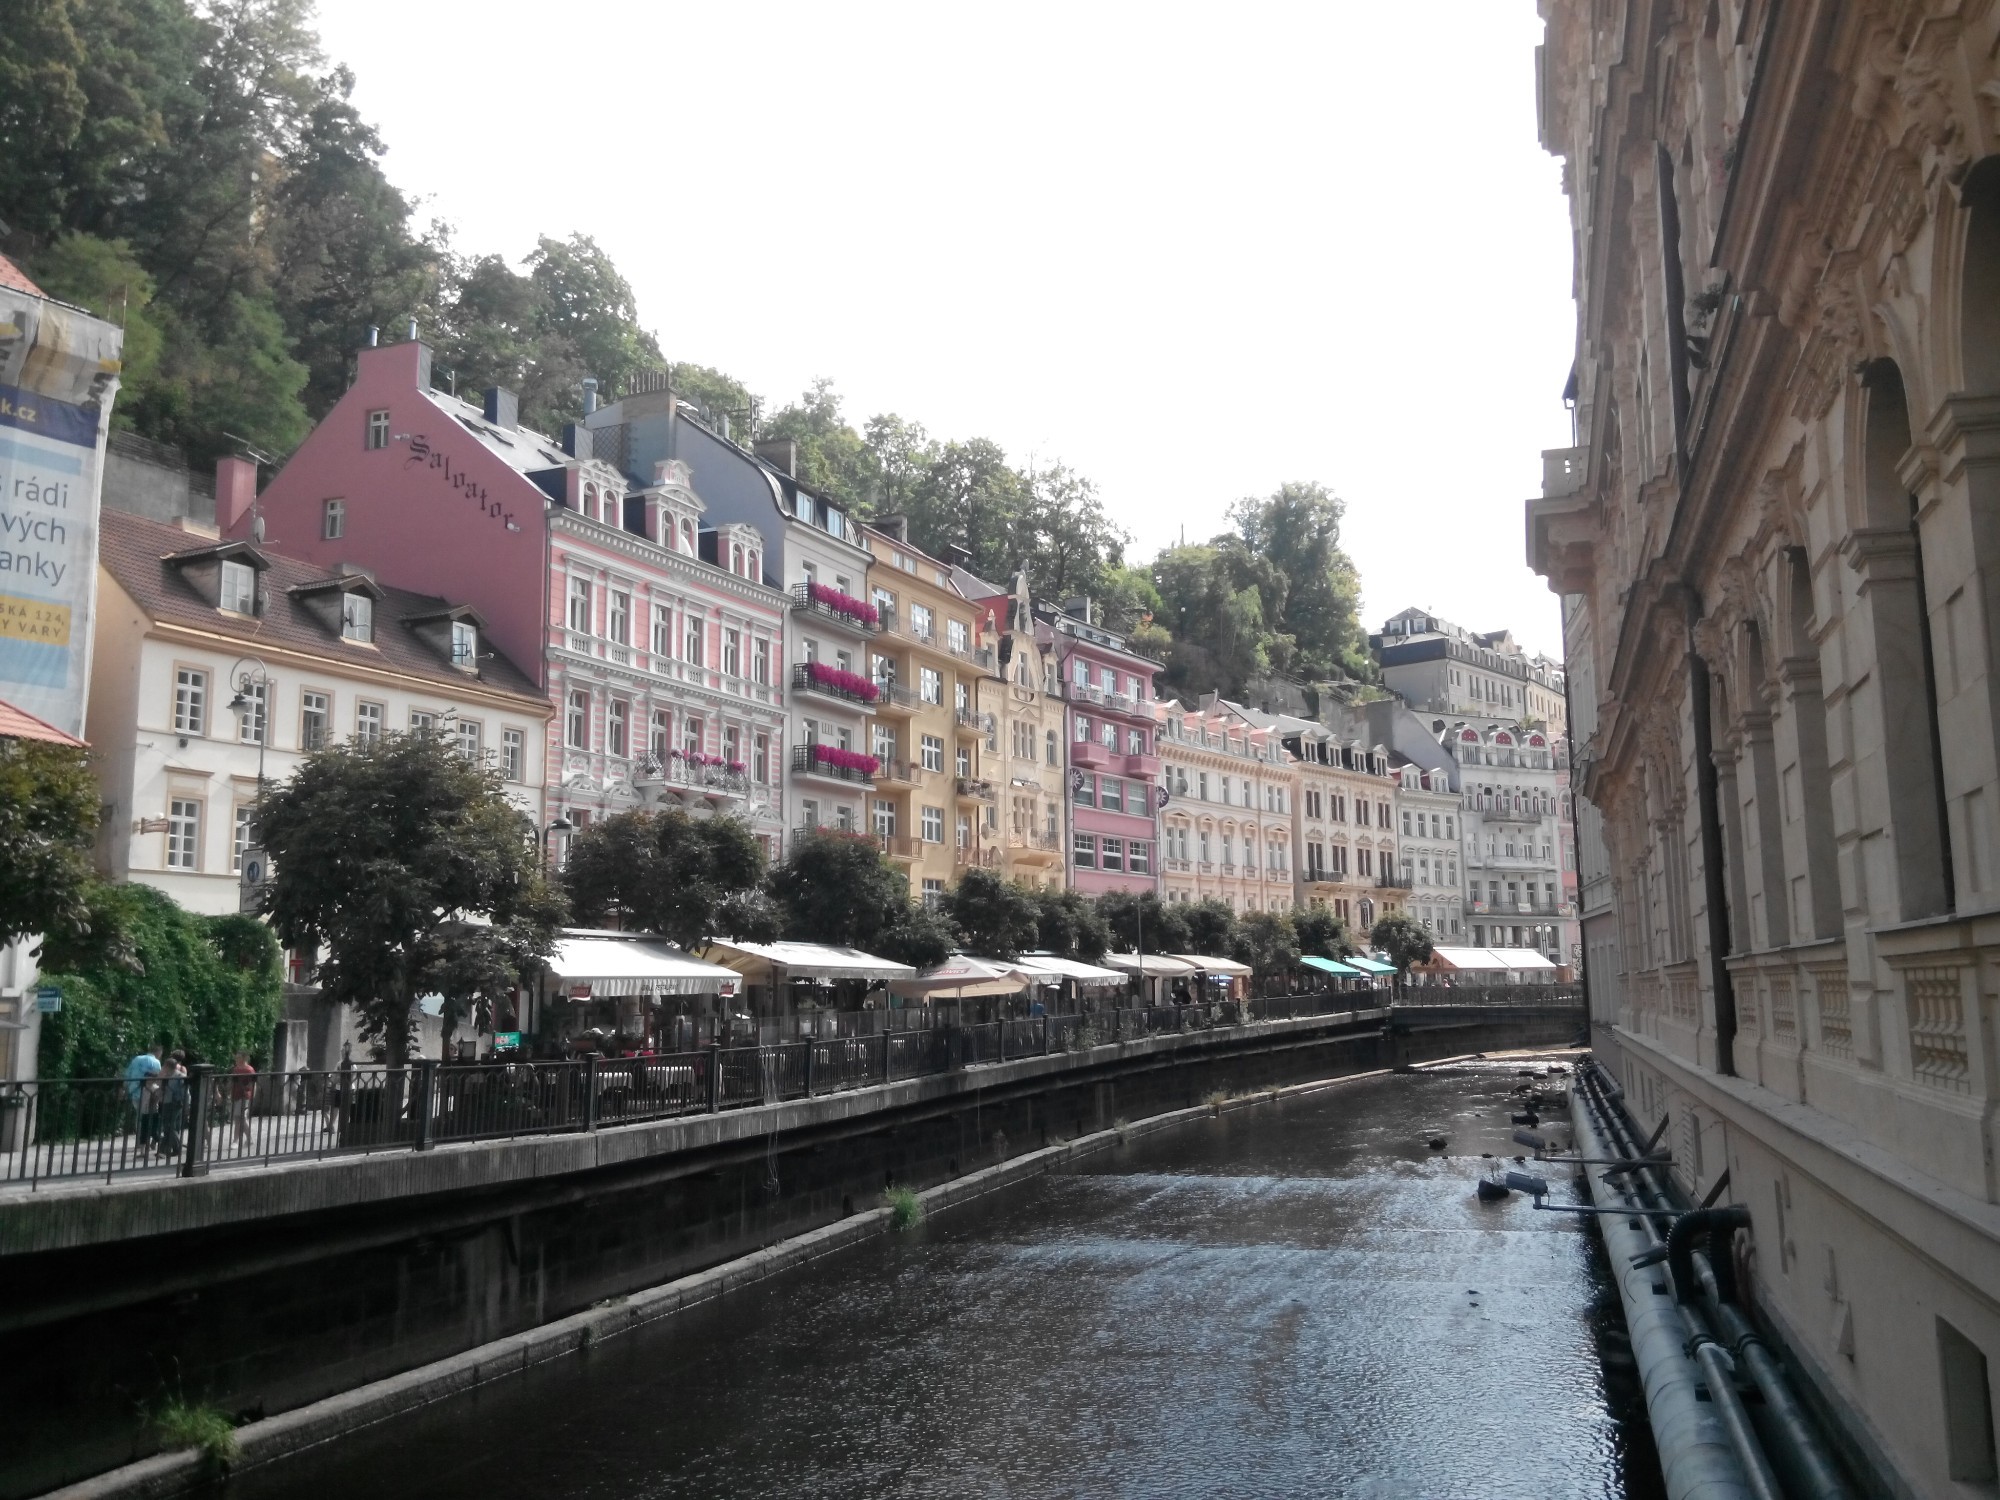 Karlovy Vary<br/> <br/>
August 2015